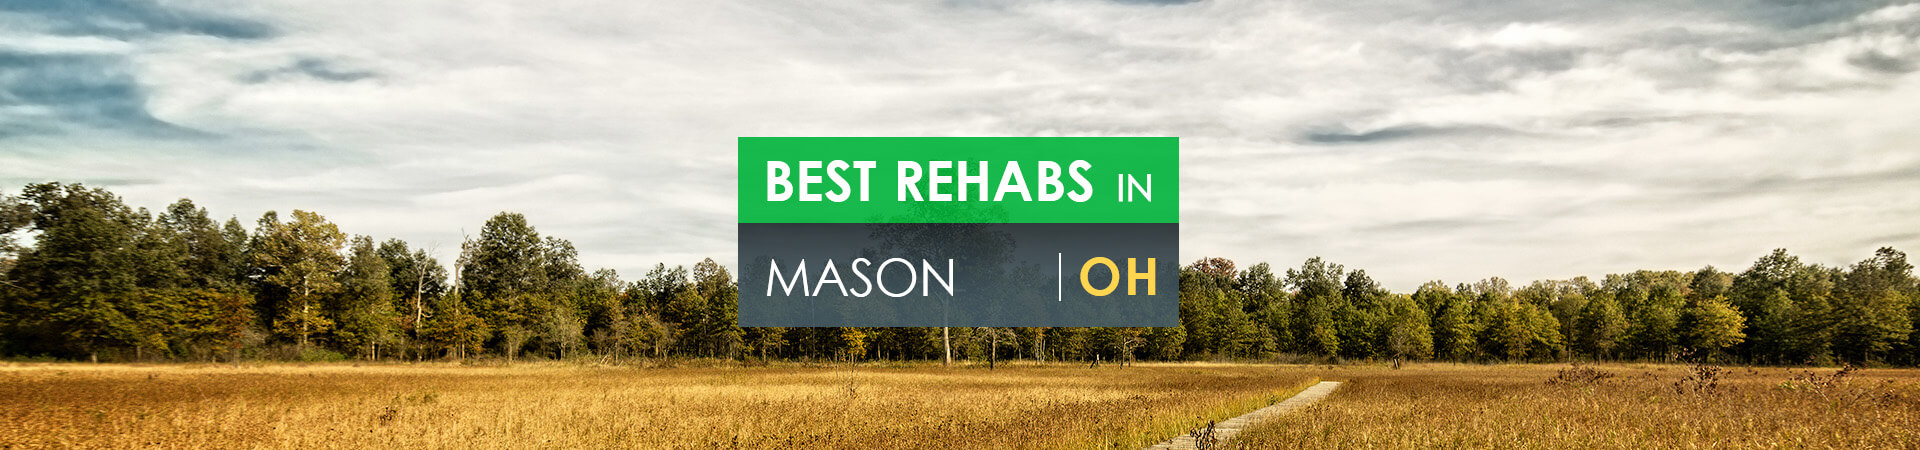 Best rehabs in Mason, OH